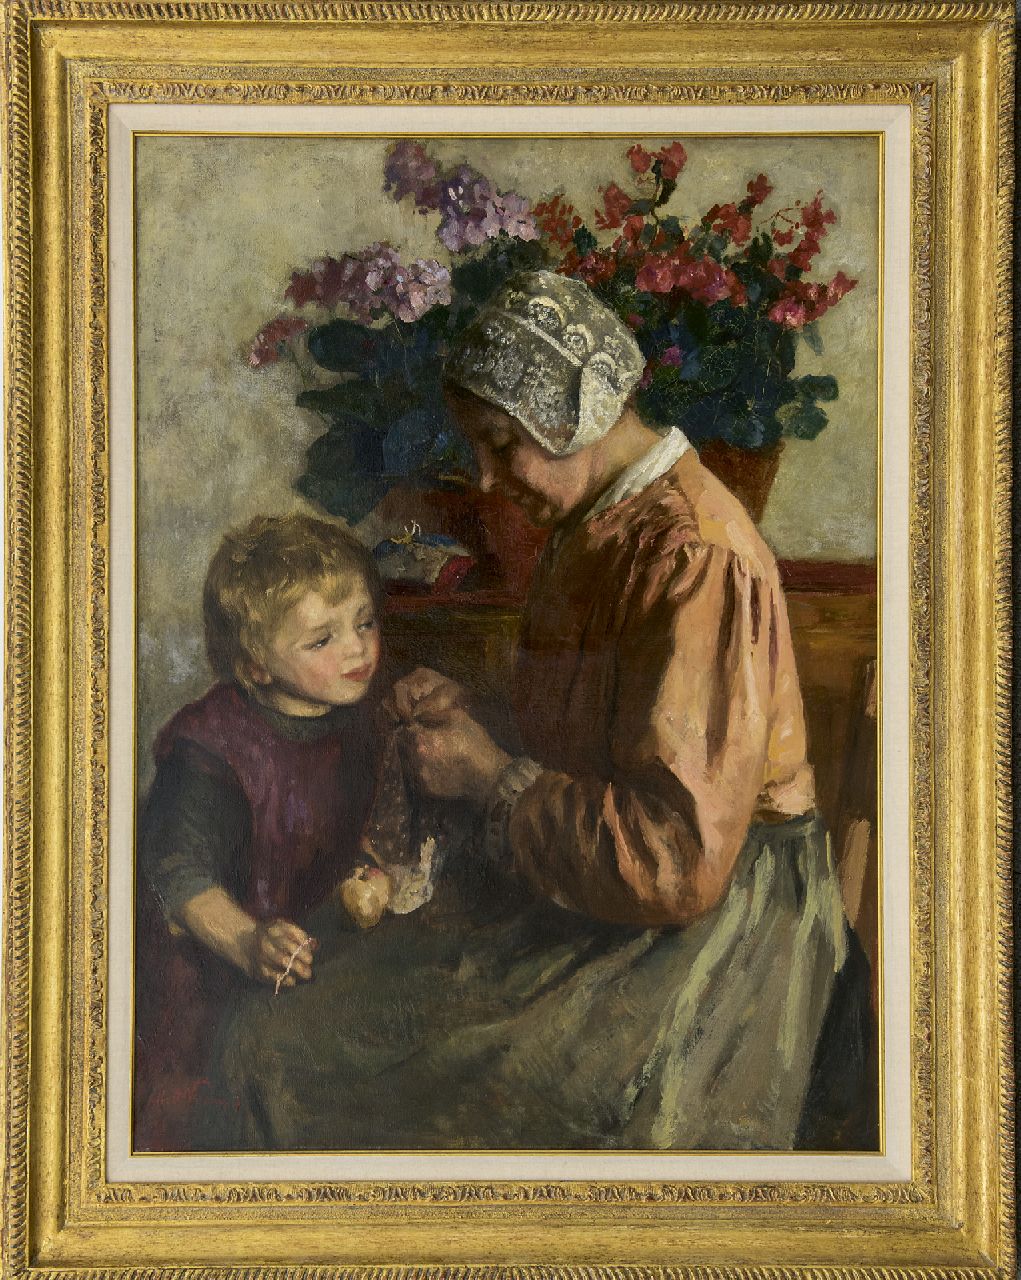 Neuhuys J.A.  | Johannes 'Albert' Neuhuys, Bij moeder, olieverf op doek 100,3 x 74,7 cm, gesigneerd linksonder